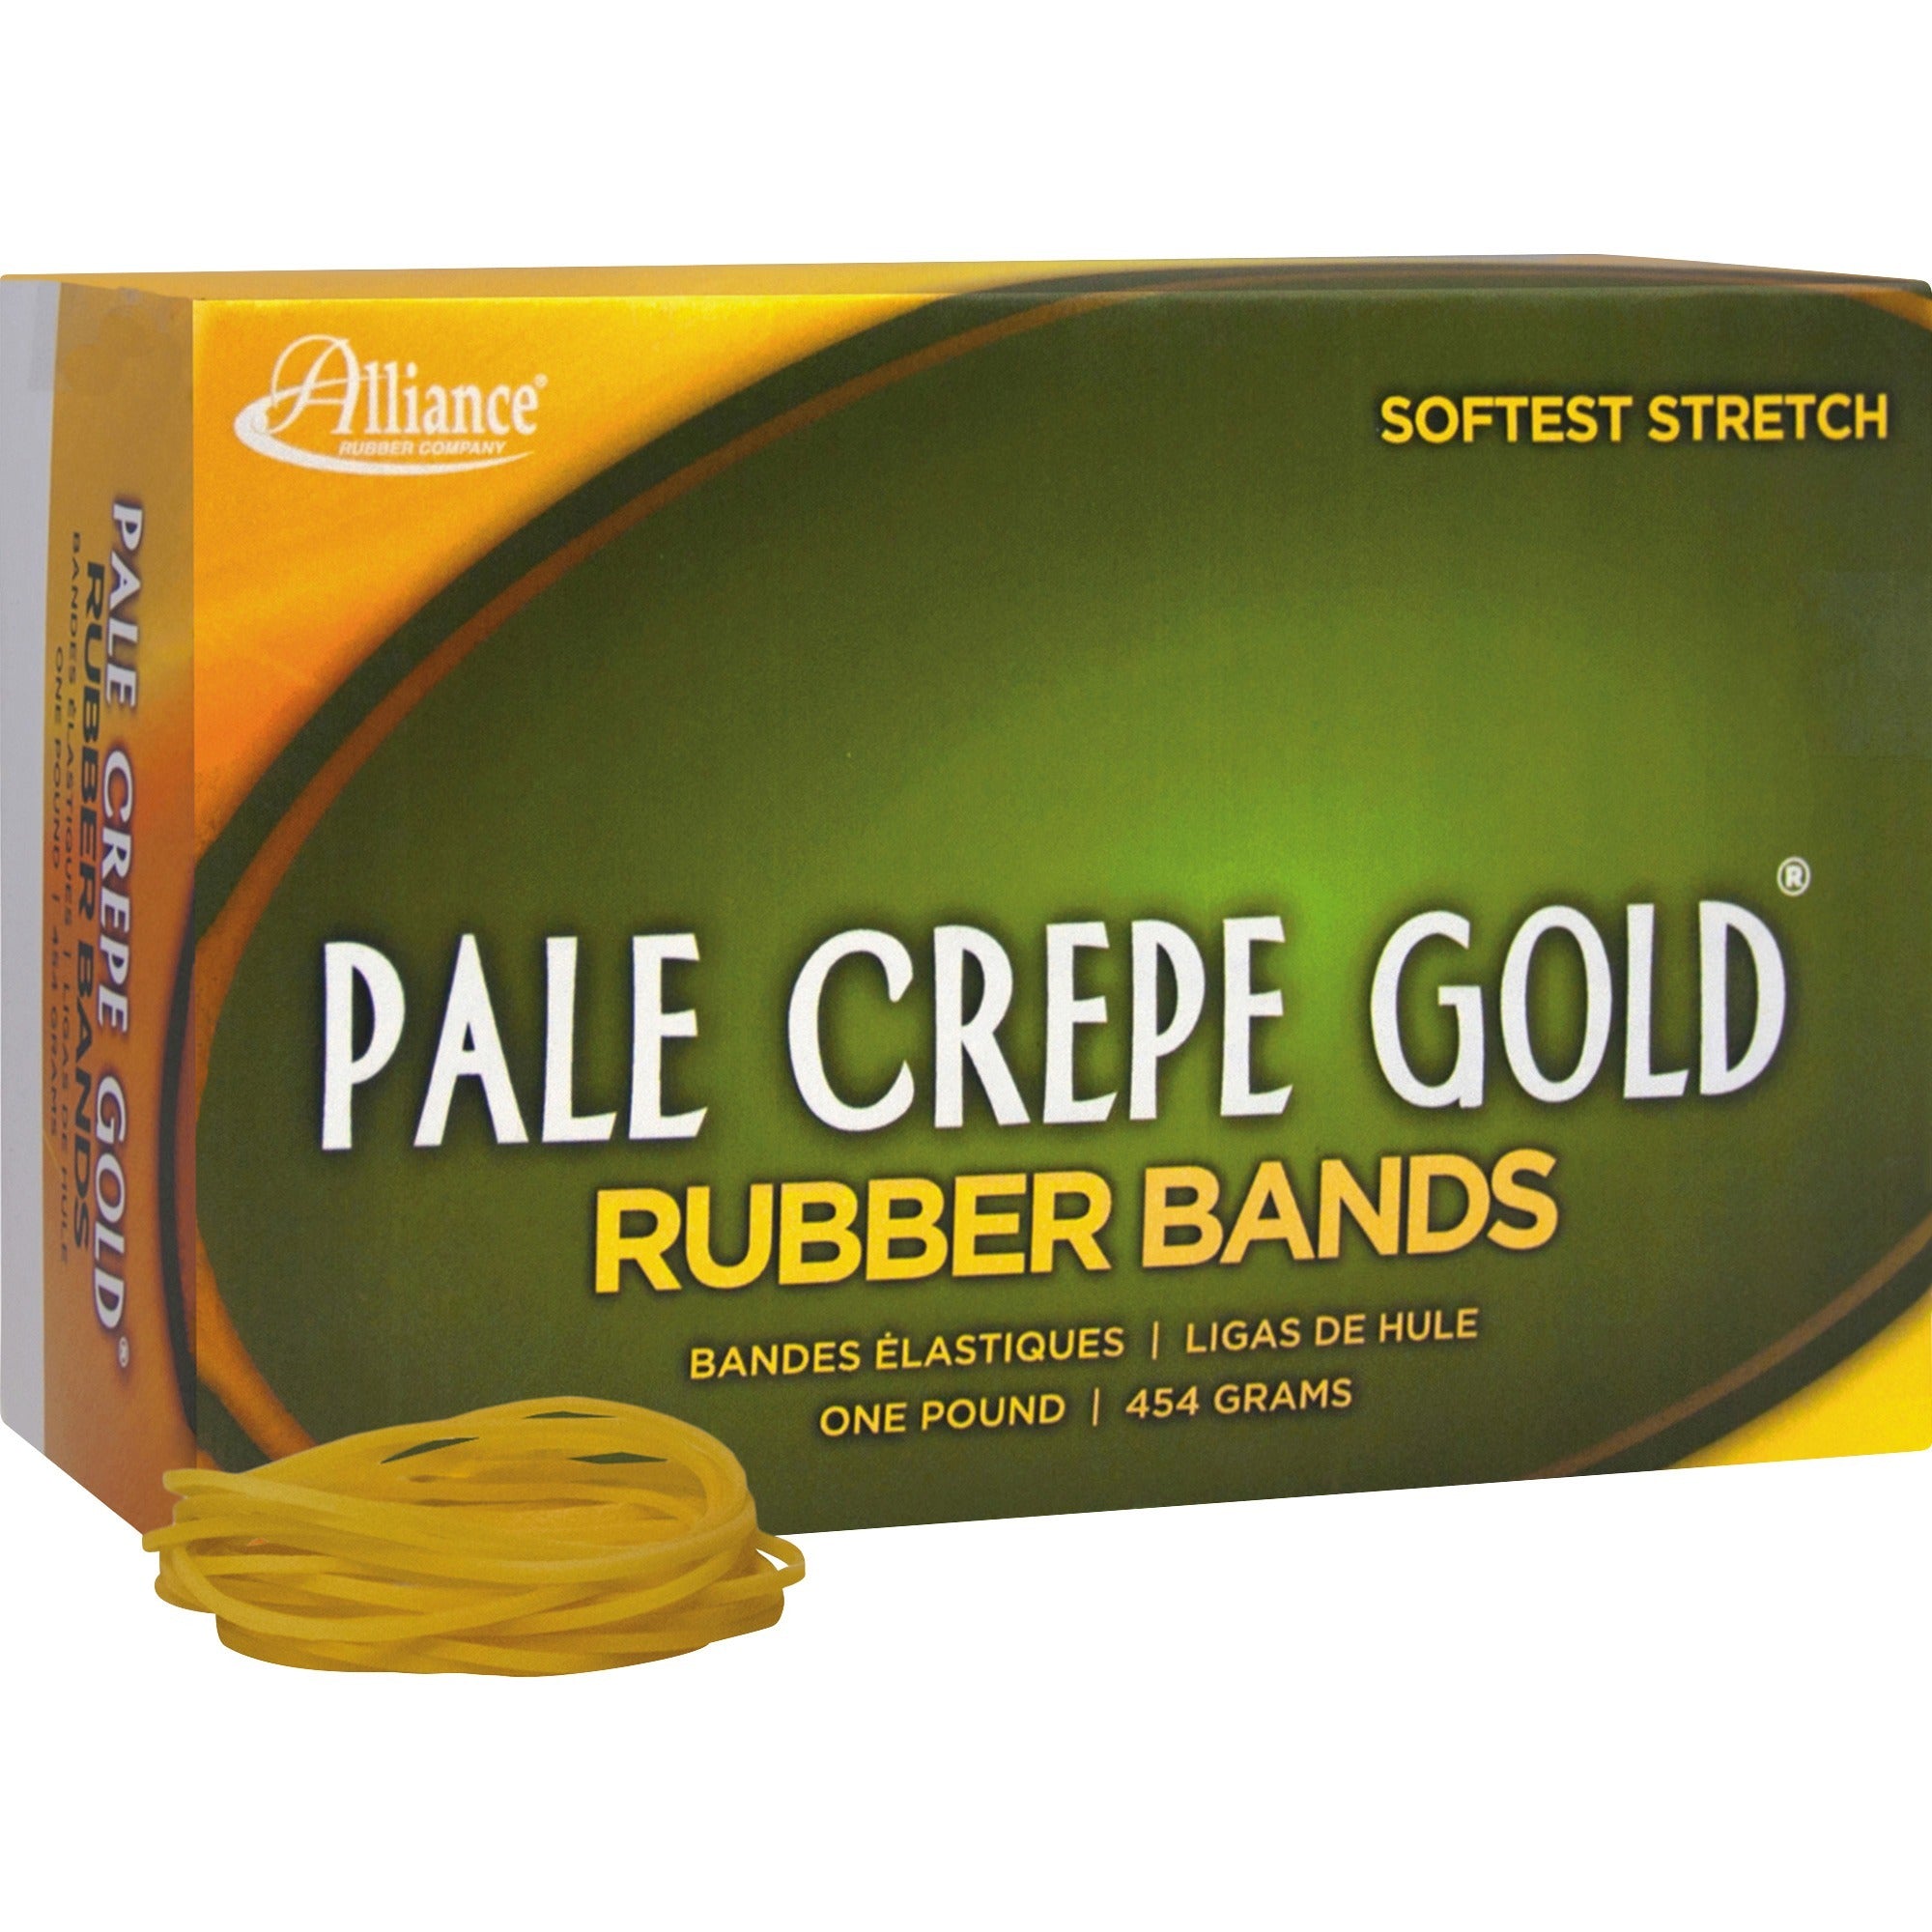 Alliance Rubber 20165 Pale Crepe Gold Rubber Bands - Size #16 - Approx. 2675 Bands - 2 1/2" x 1/16" - Golden Crepe - 1 lb Box - 